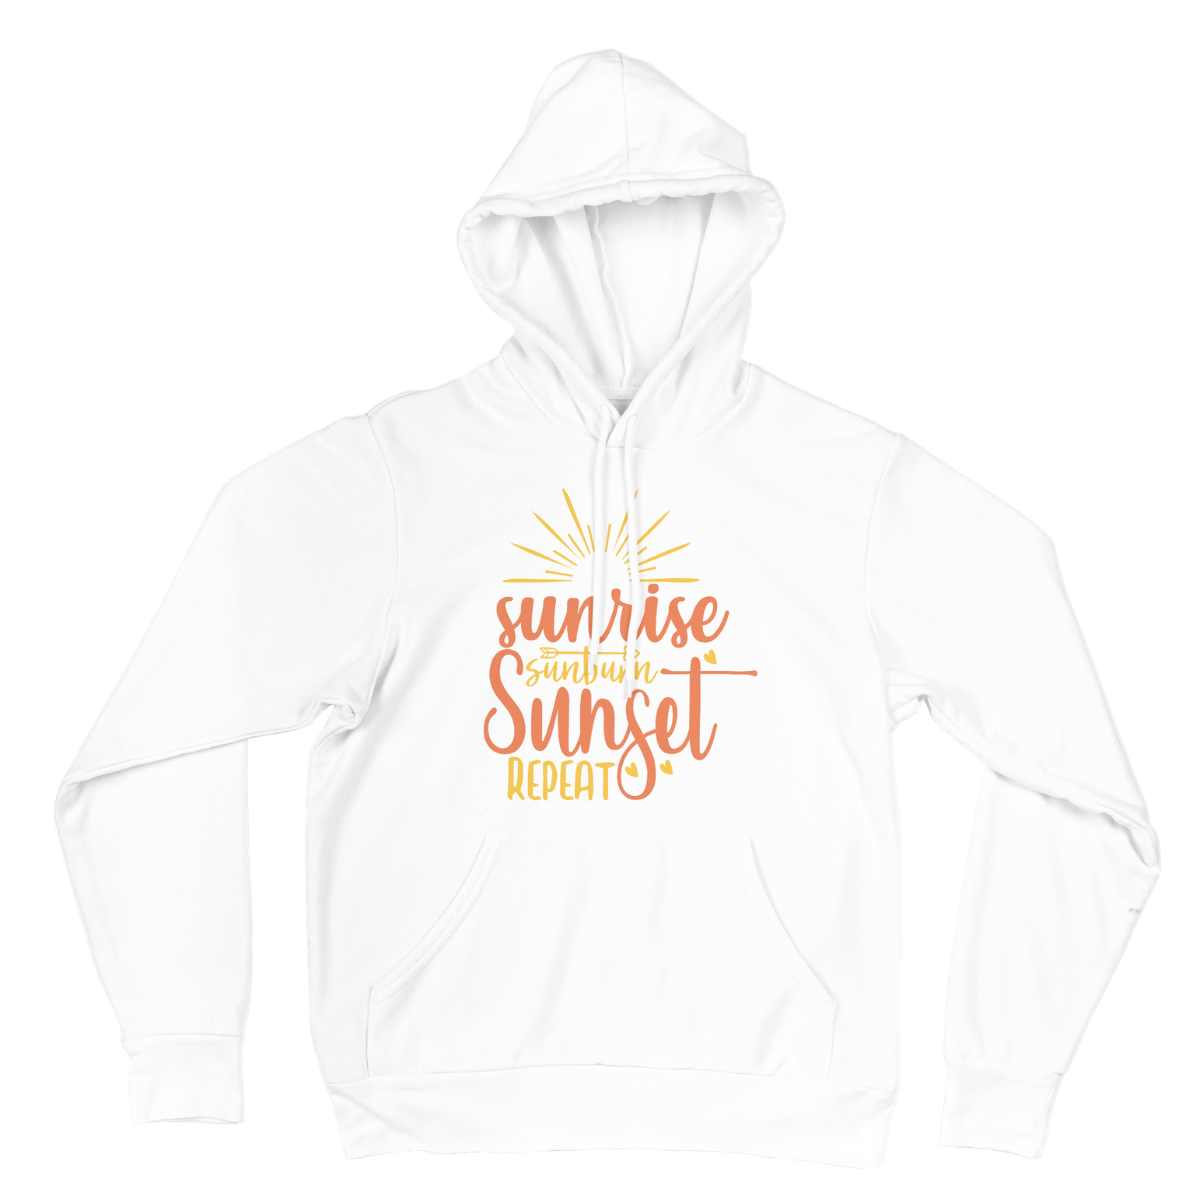 Sunrise sunburn sunset repeat | Digital Download | Cut File | SVG - Only The Sweet Stuff